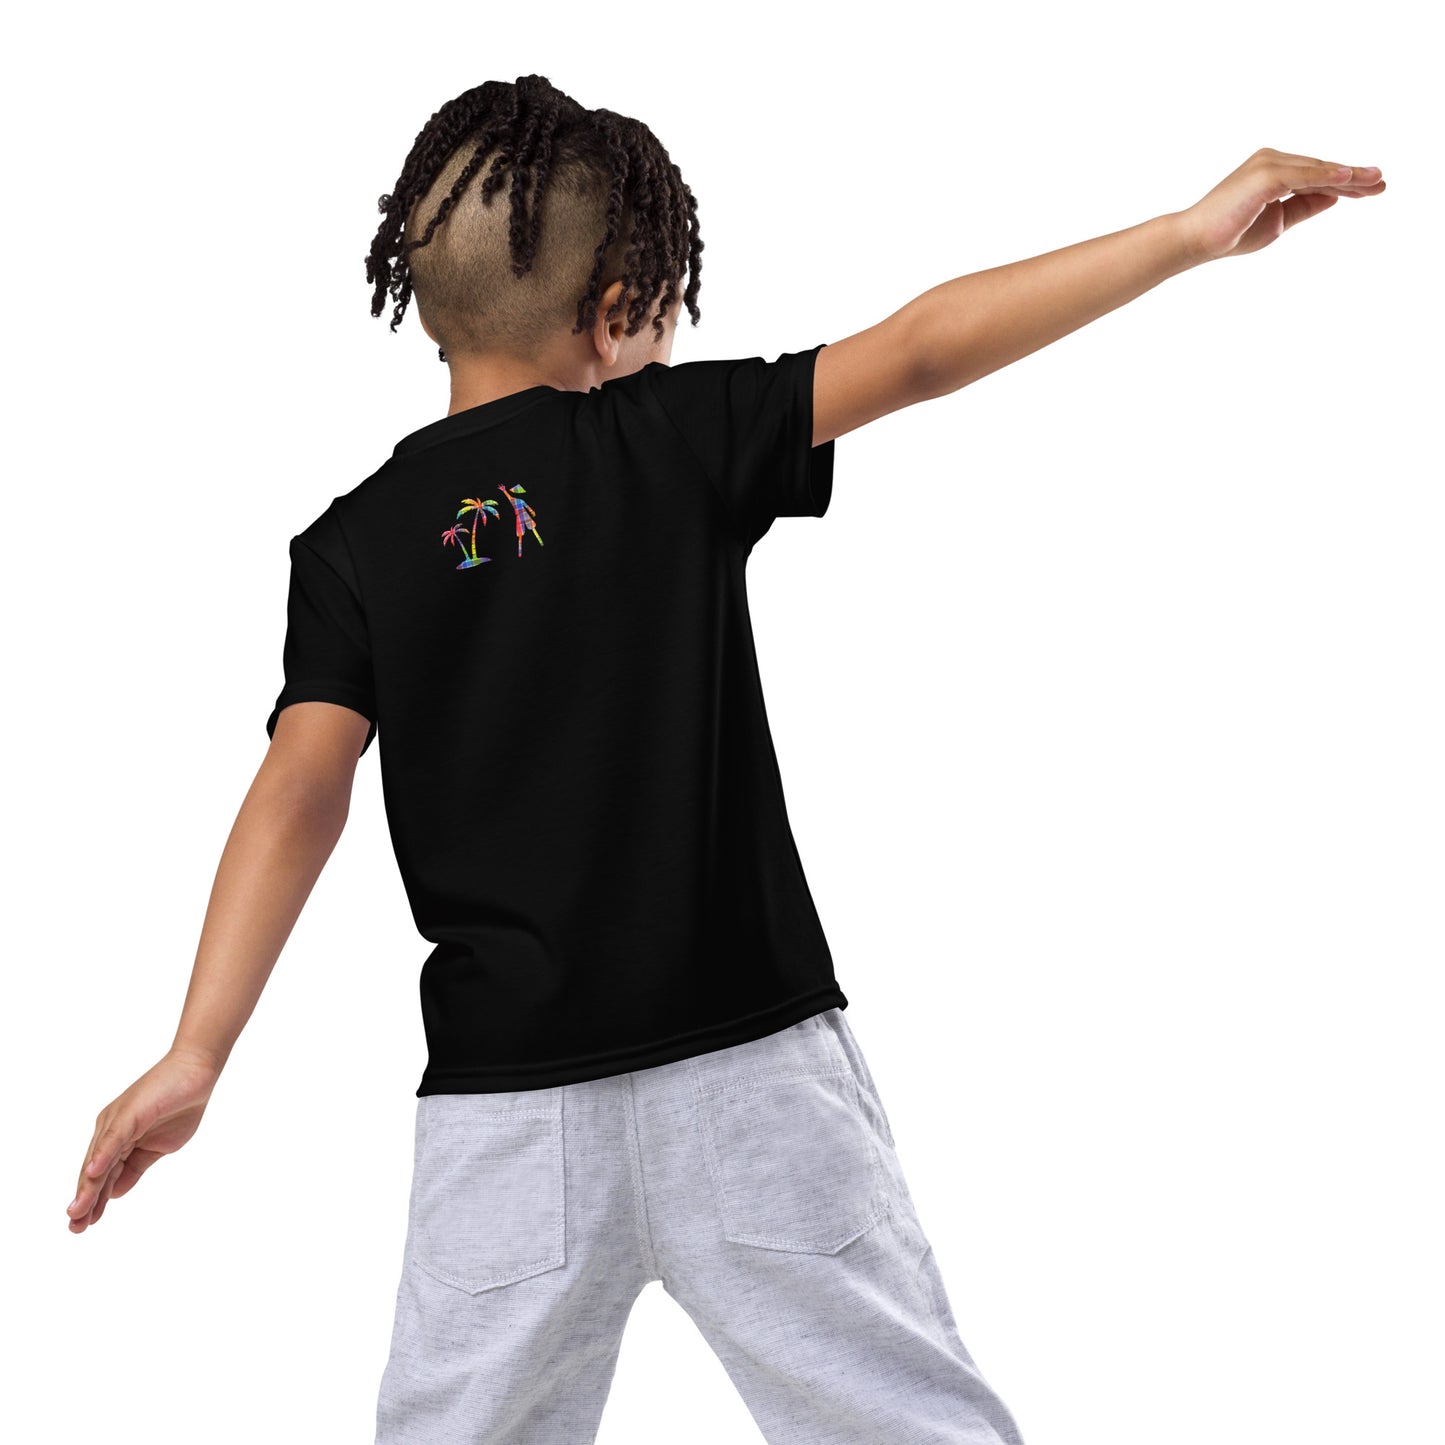 Black V.Localized (Madras) Dry-Fit Kids  T-Shirt